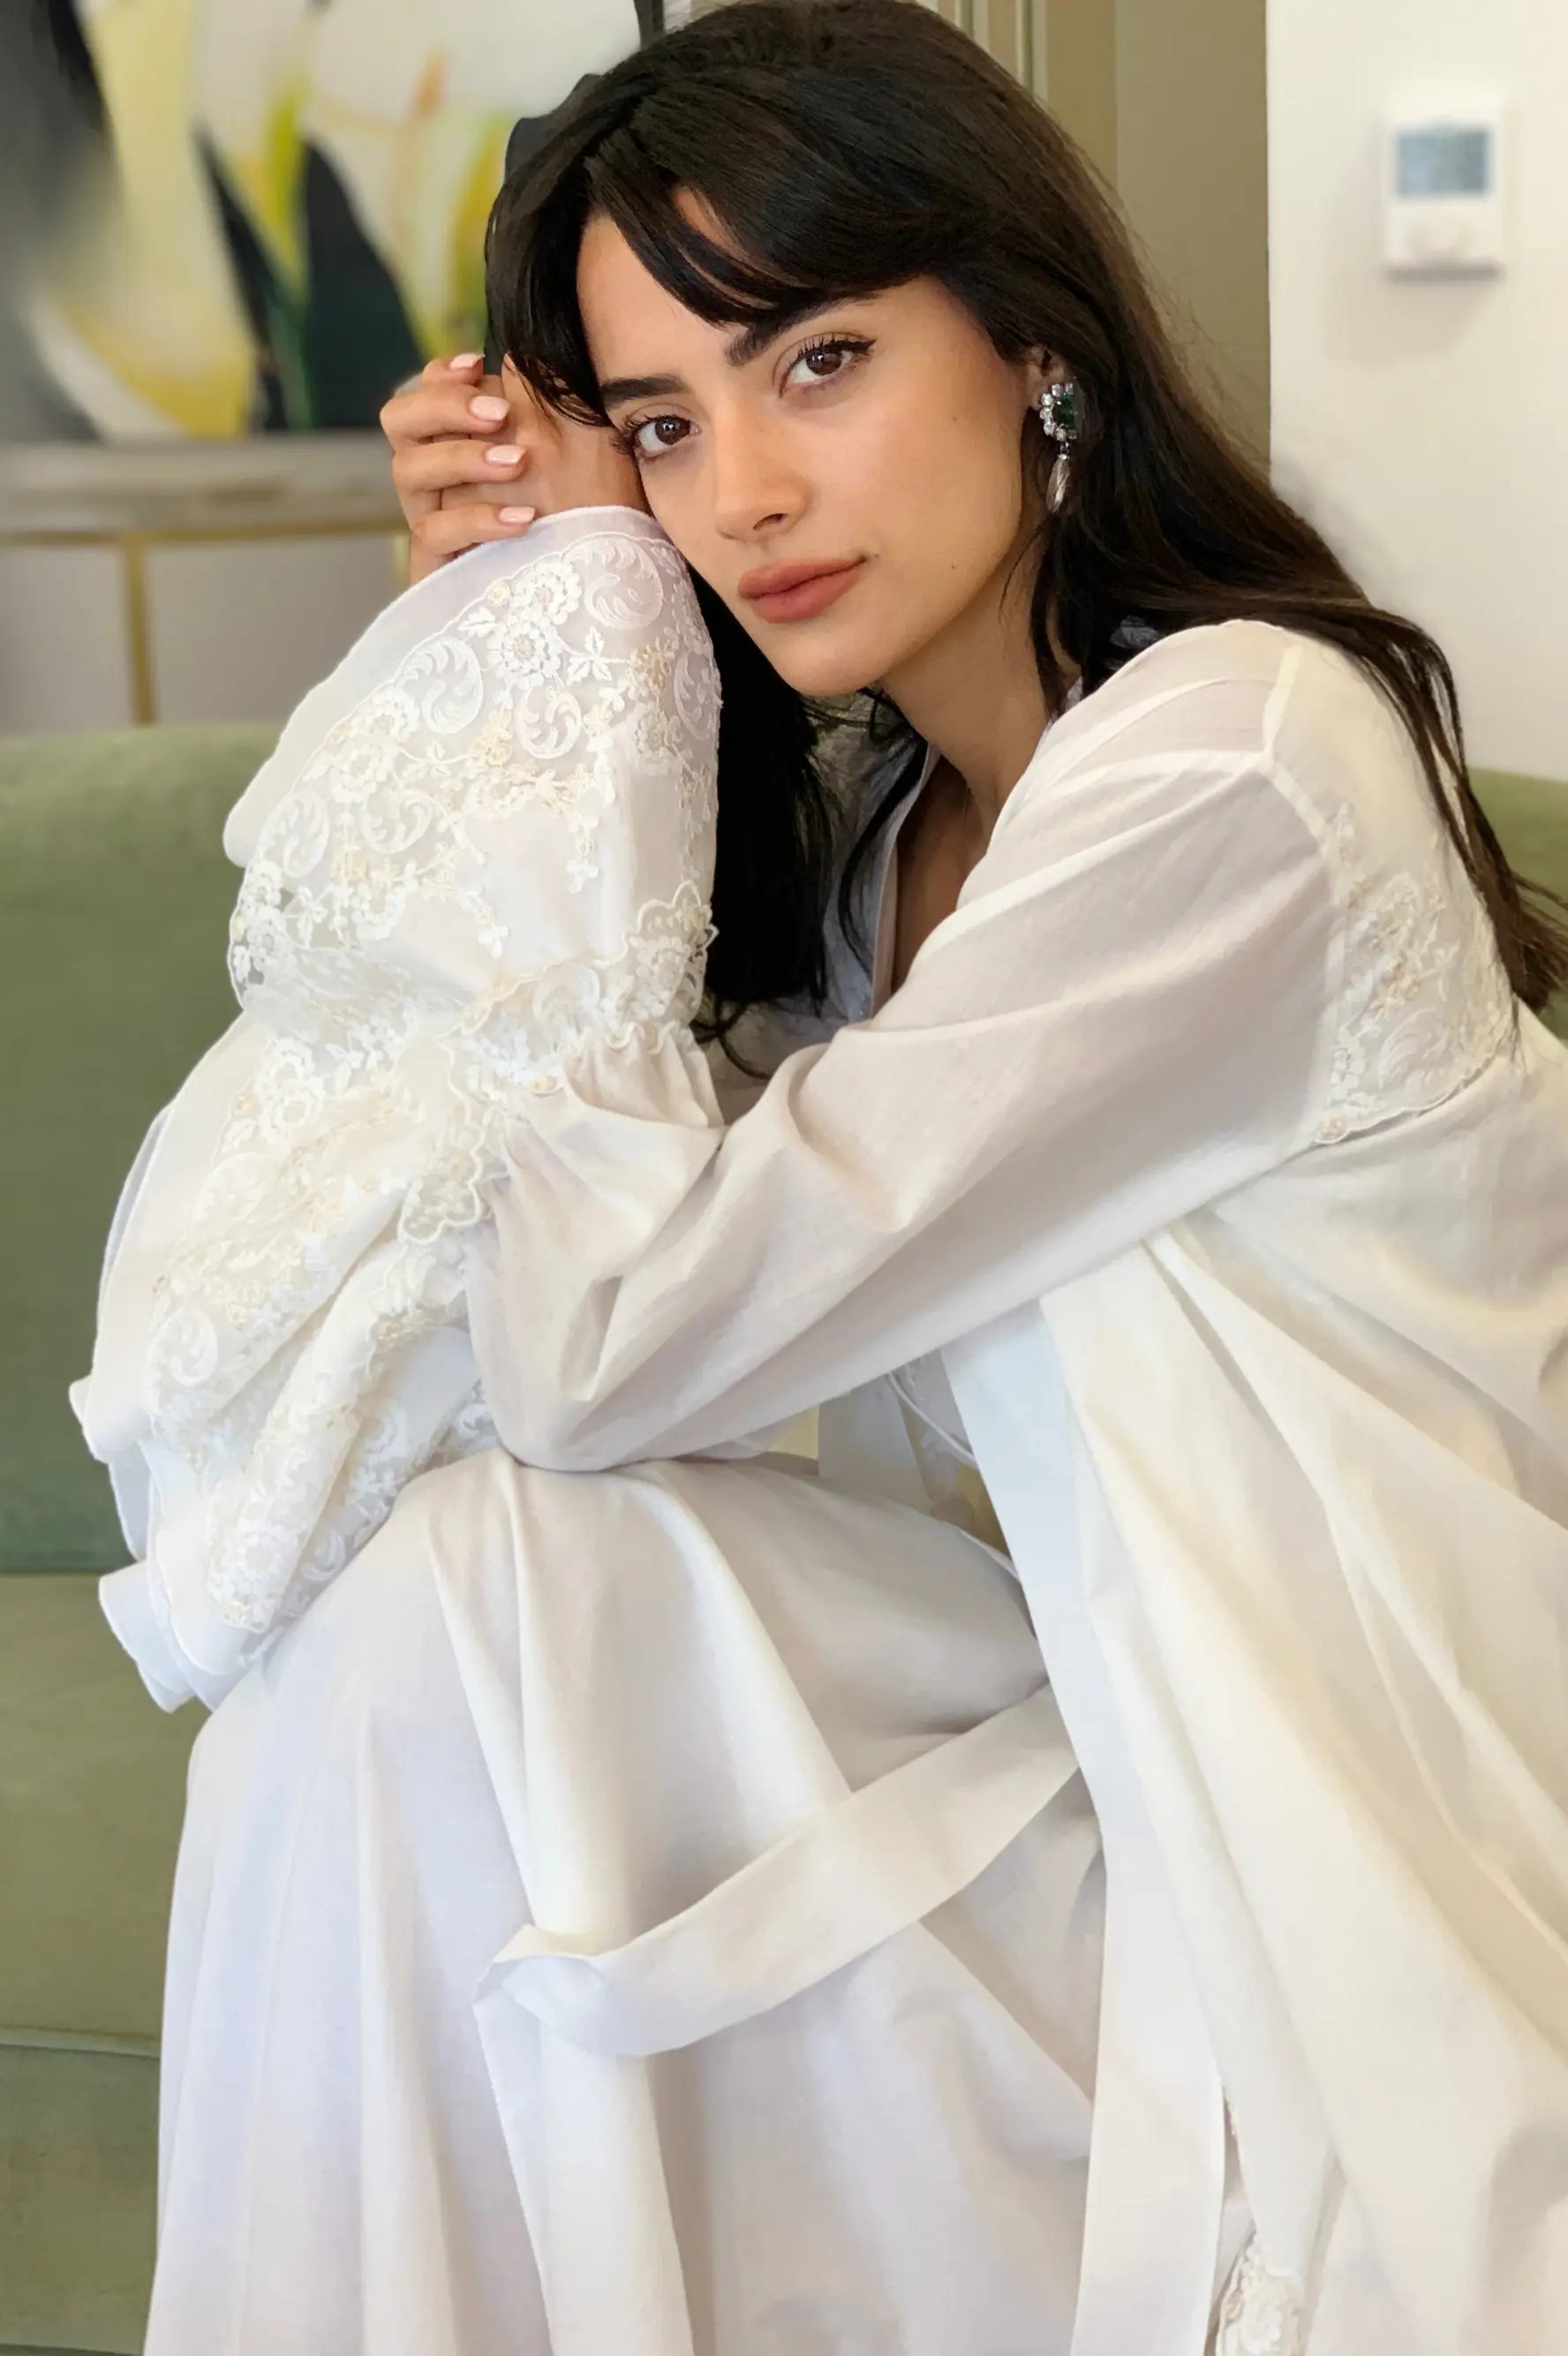 Luxury Cotton Nightdress, Pyjamas & Robes – Bocan